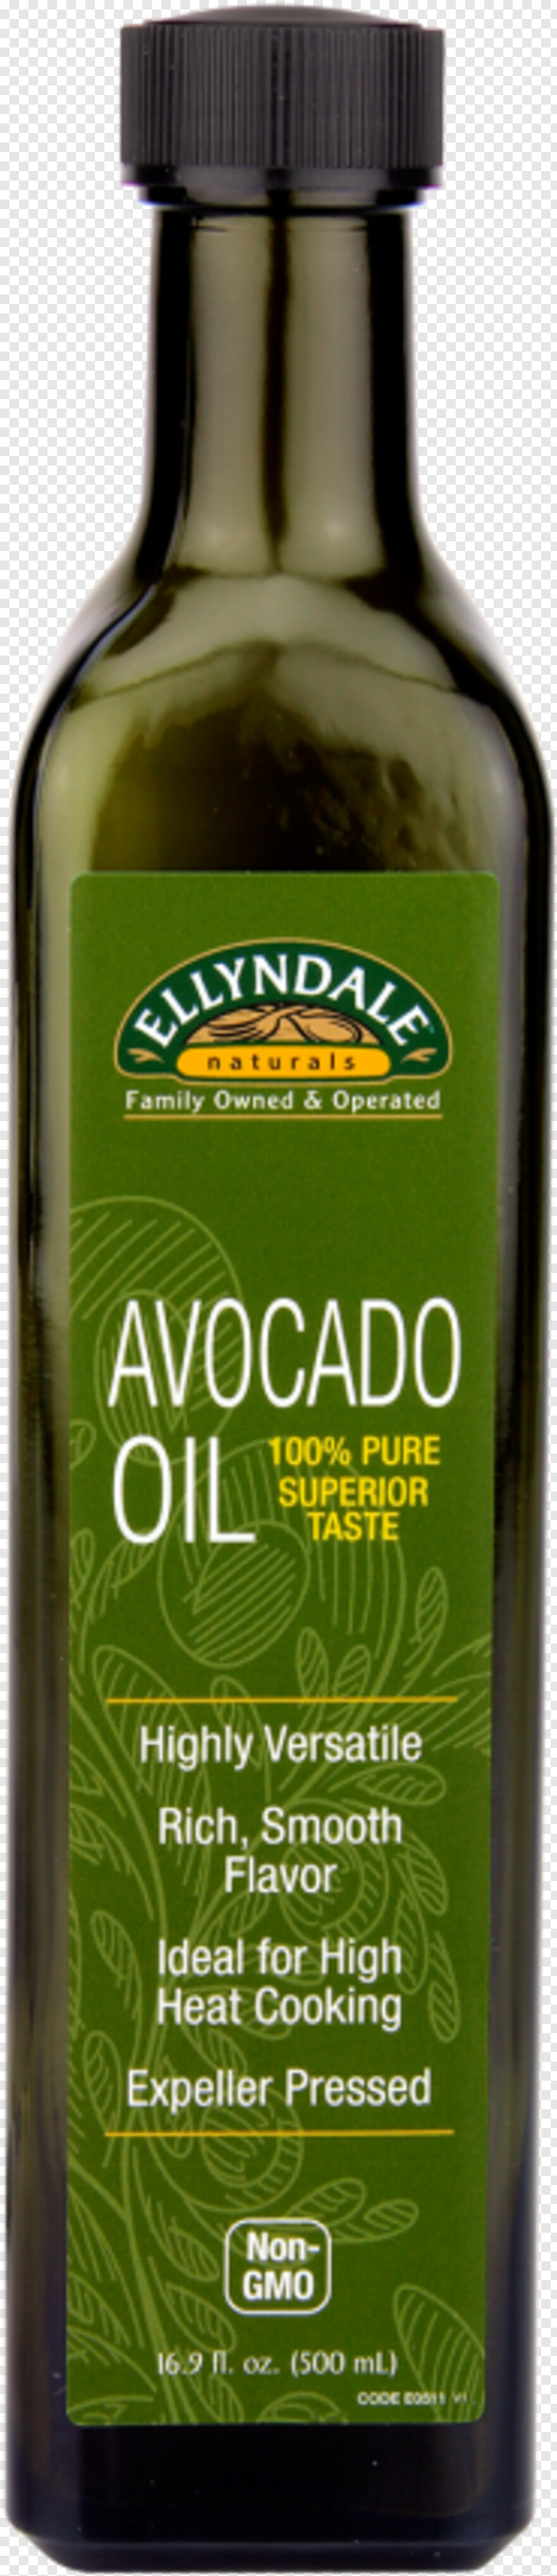 olive-oil # 440144